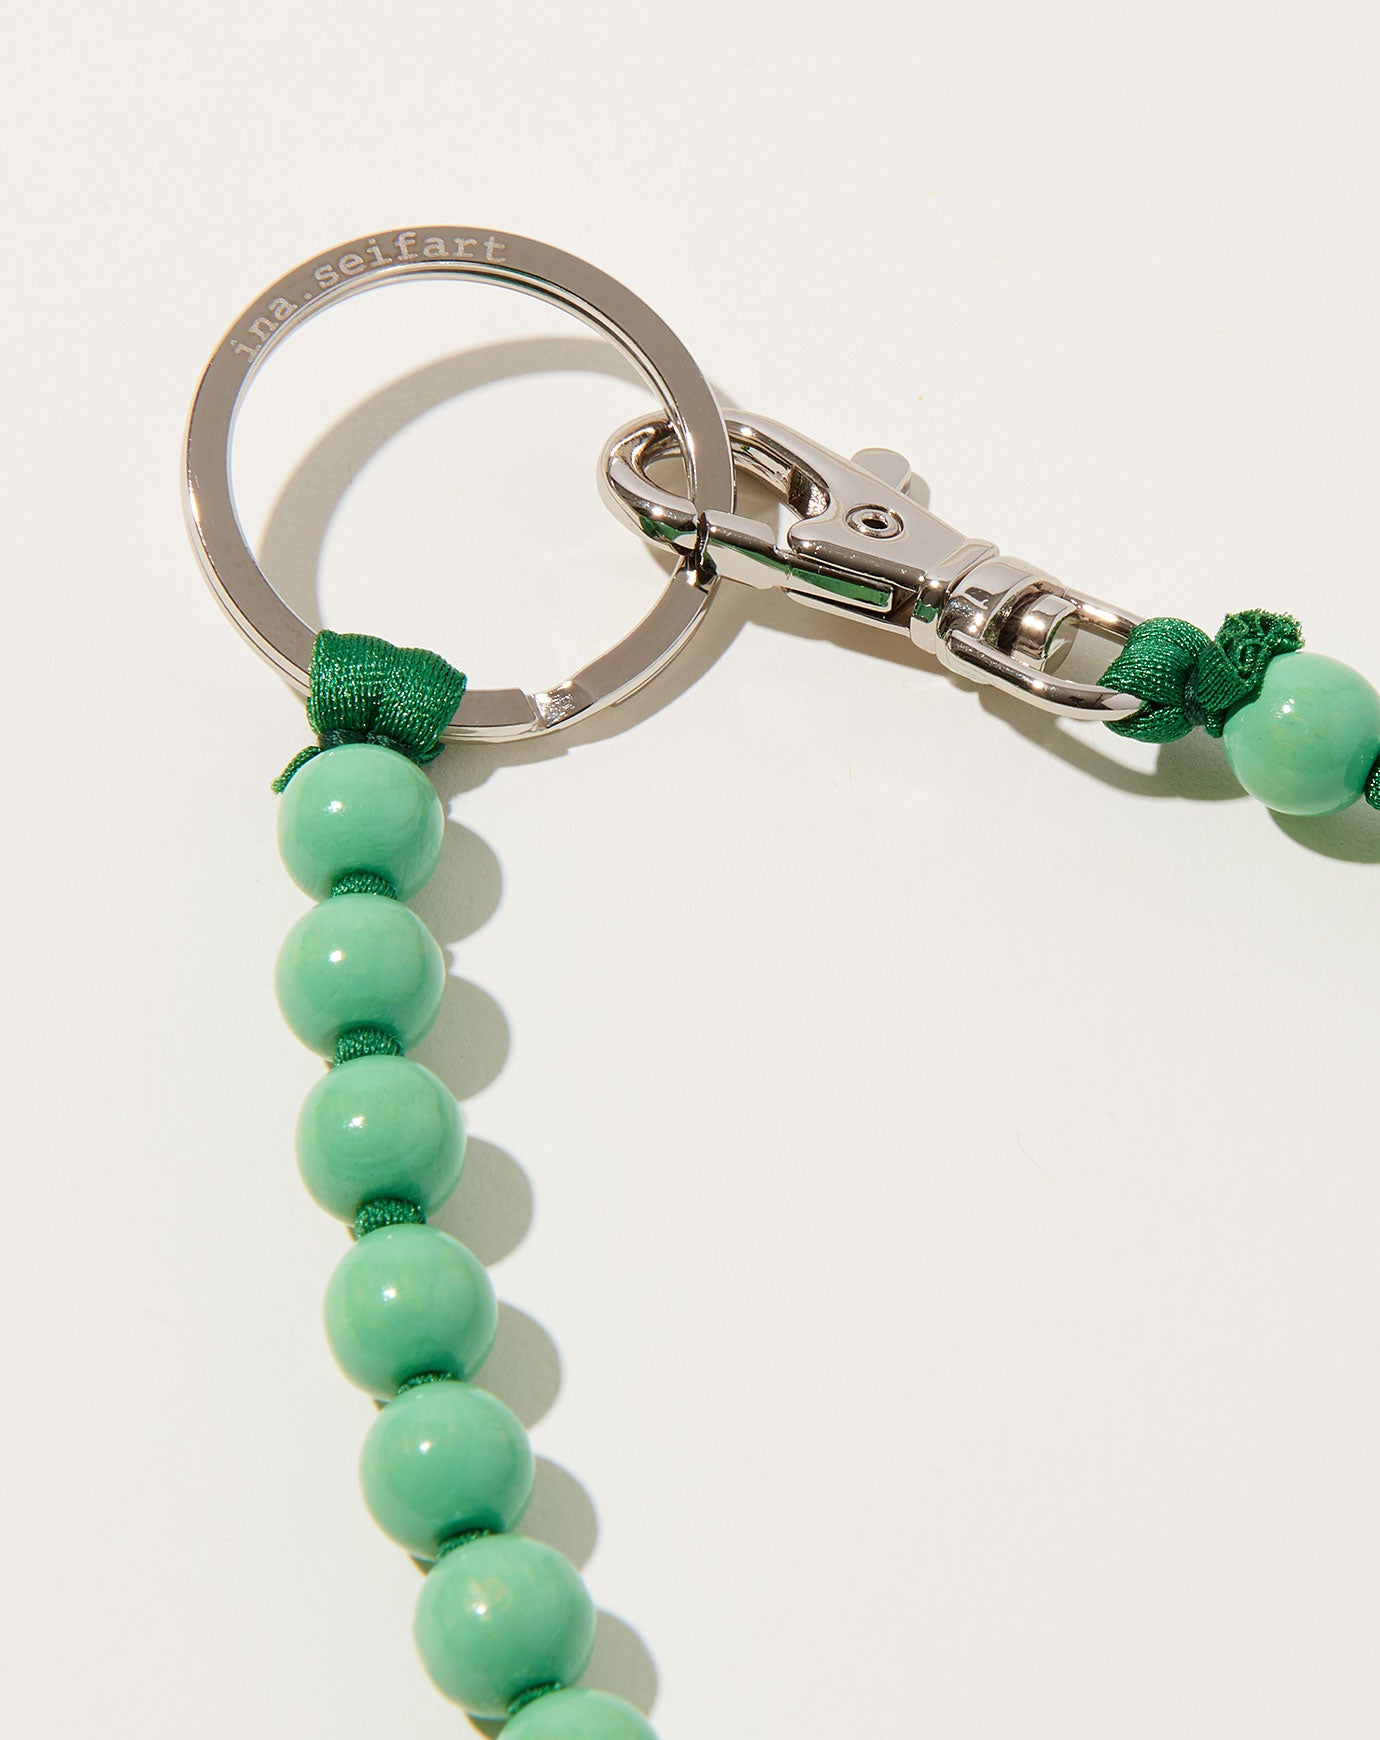 Ina Seifart Perlen Long Keyholder in Pastel Green on Dark Green